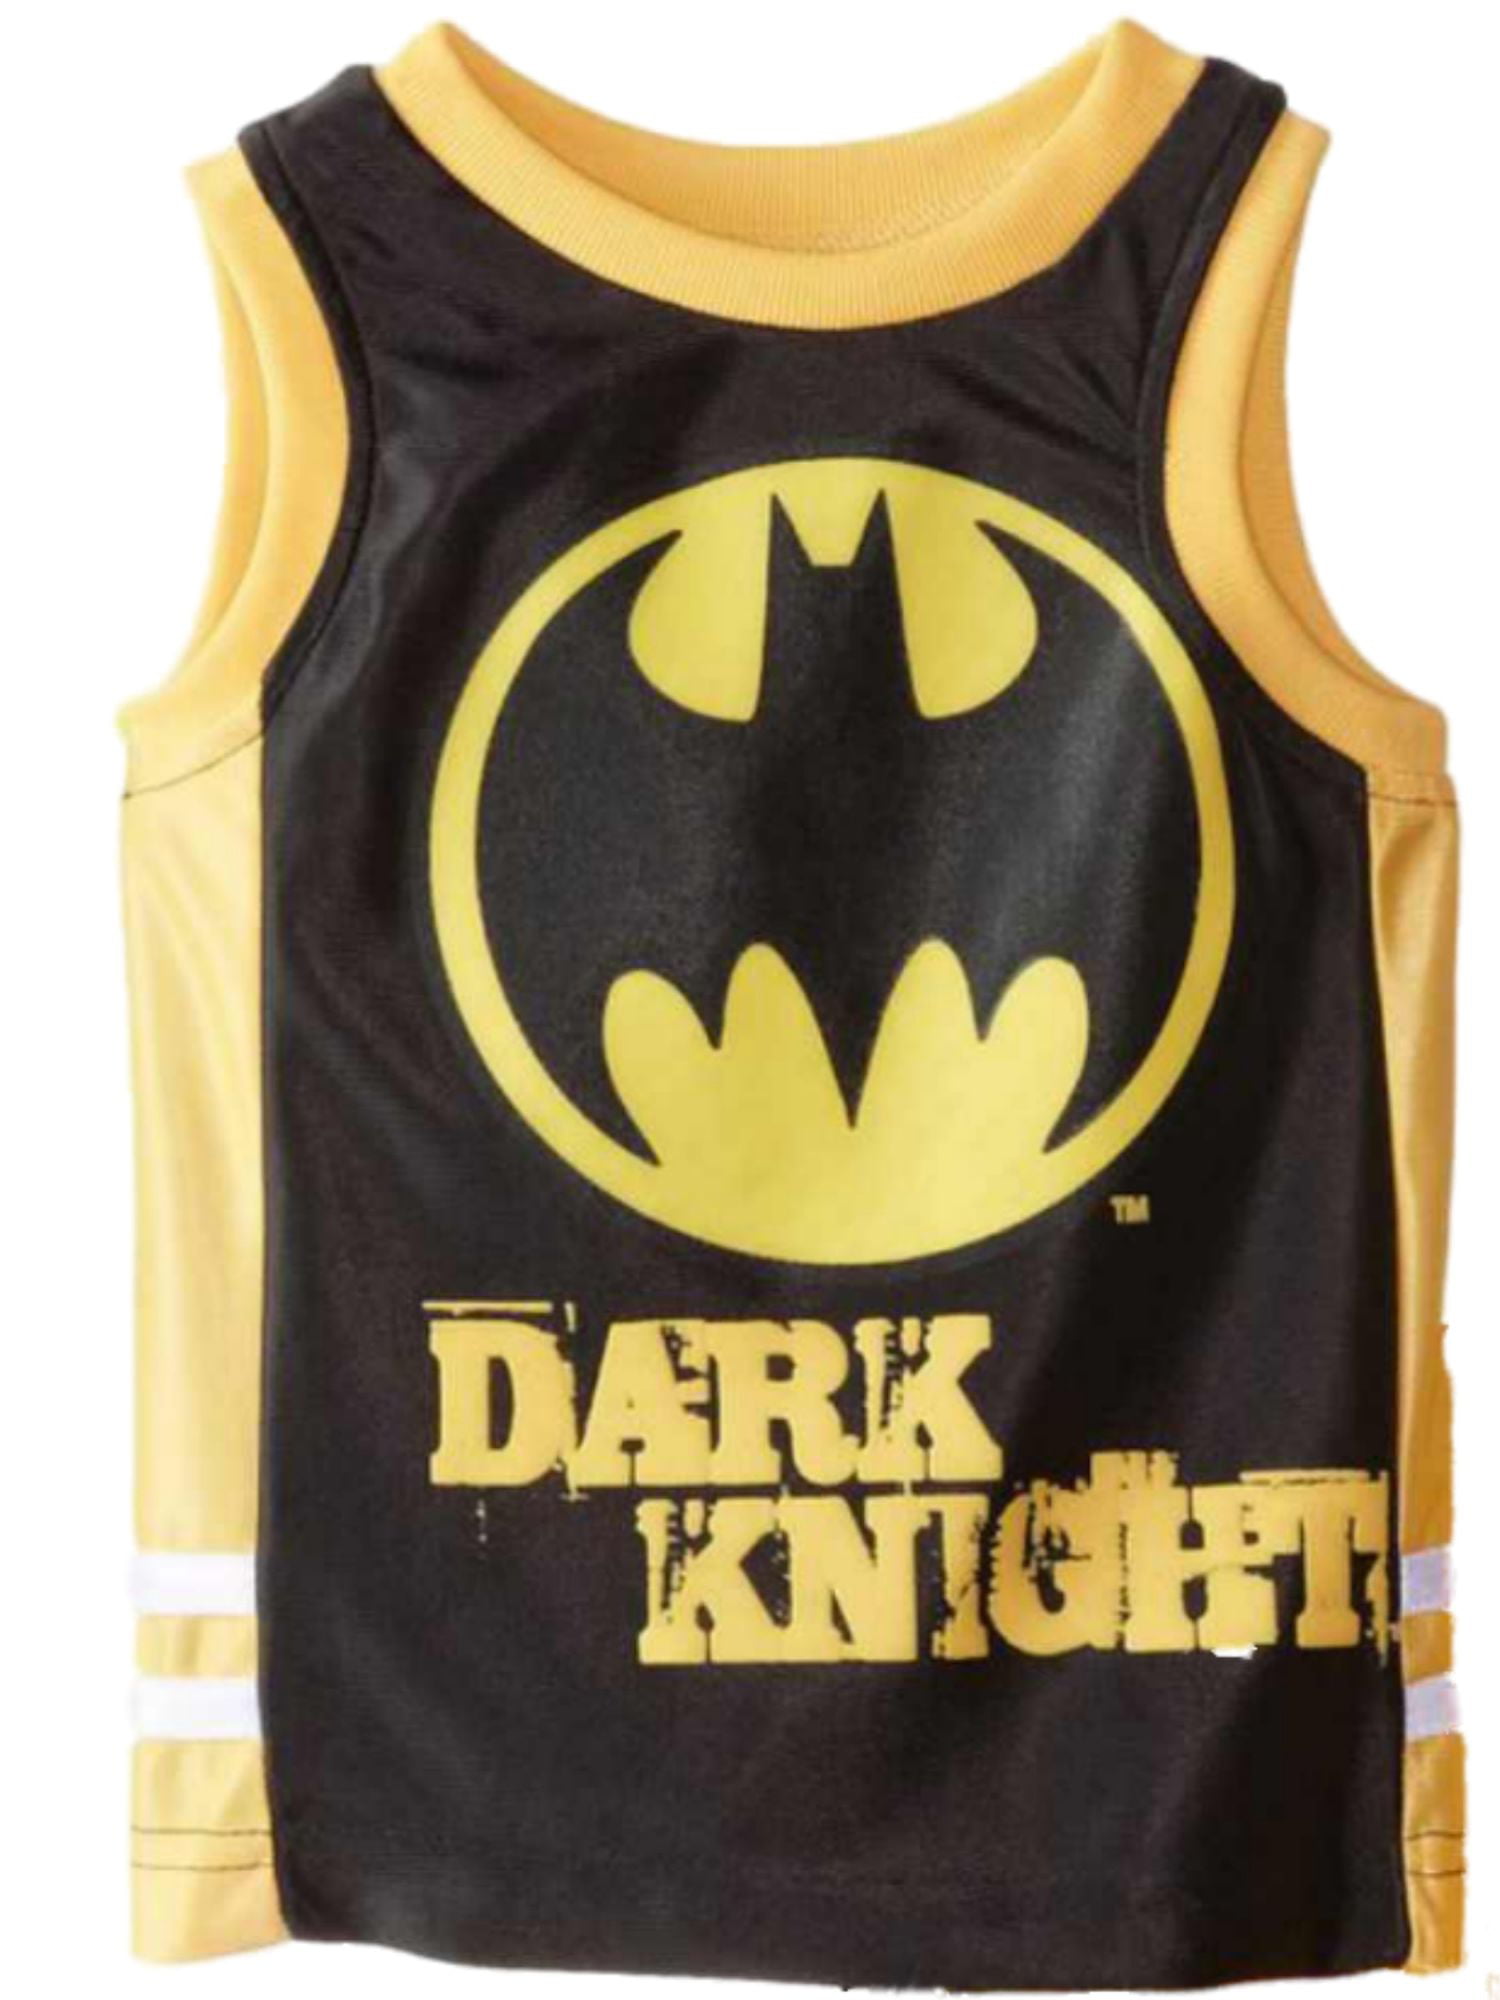 Birthday Gift Idea for Boys Dark Knight Superhero Top Official Merchandise DC Comics Batman Here Comes Batman Boys T-Shirt